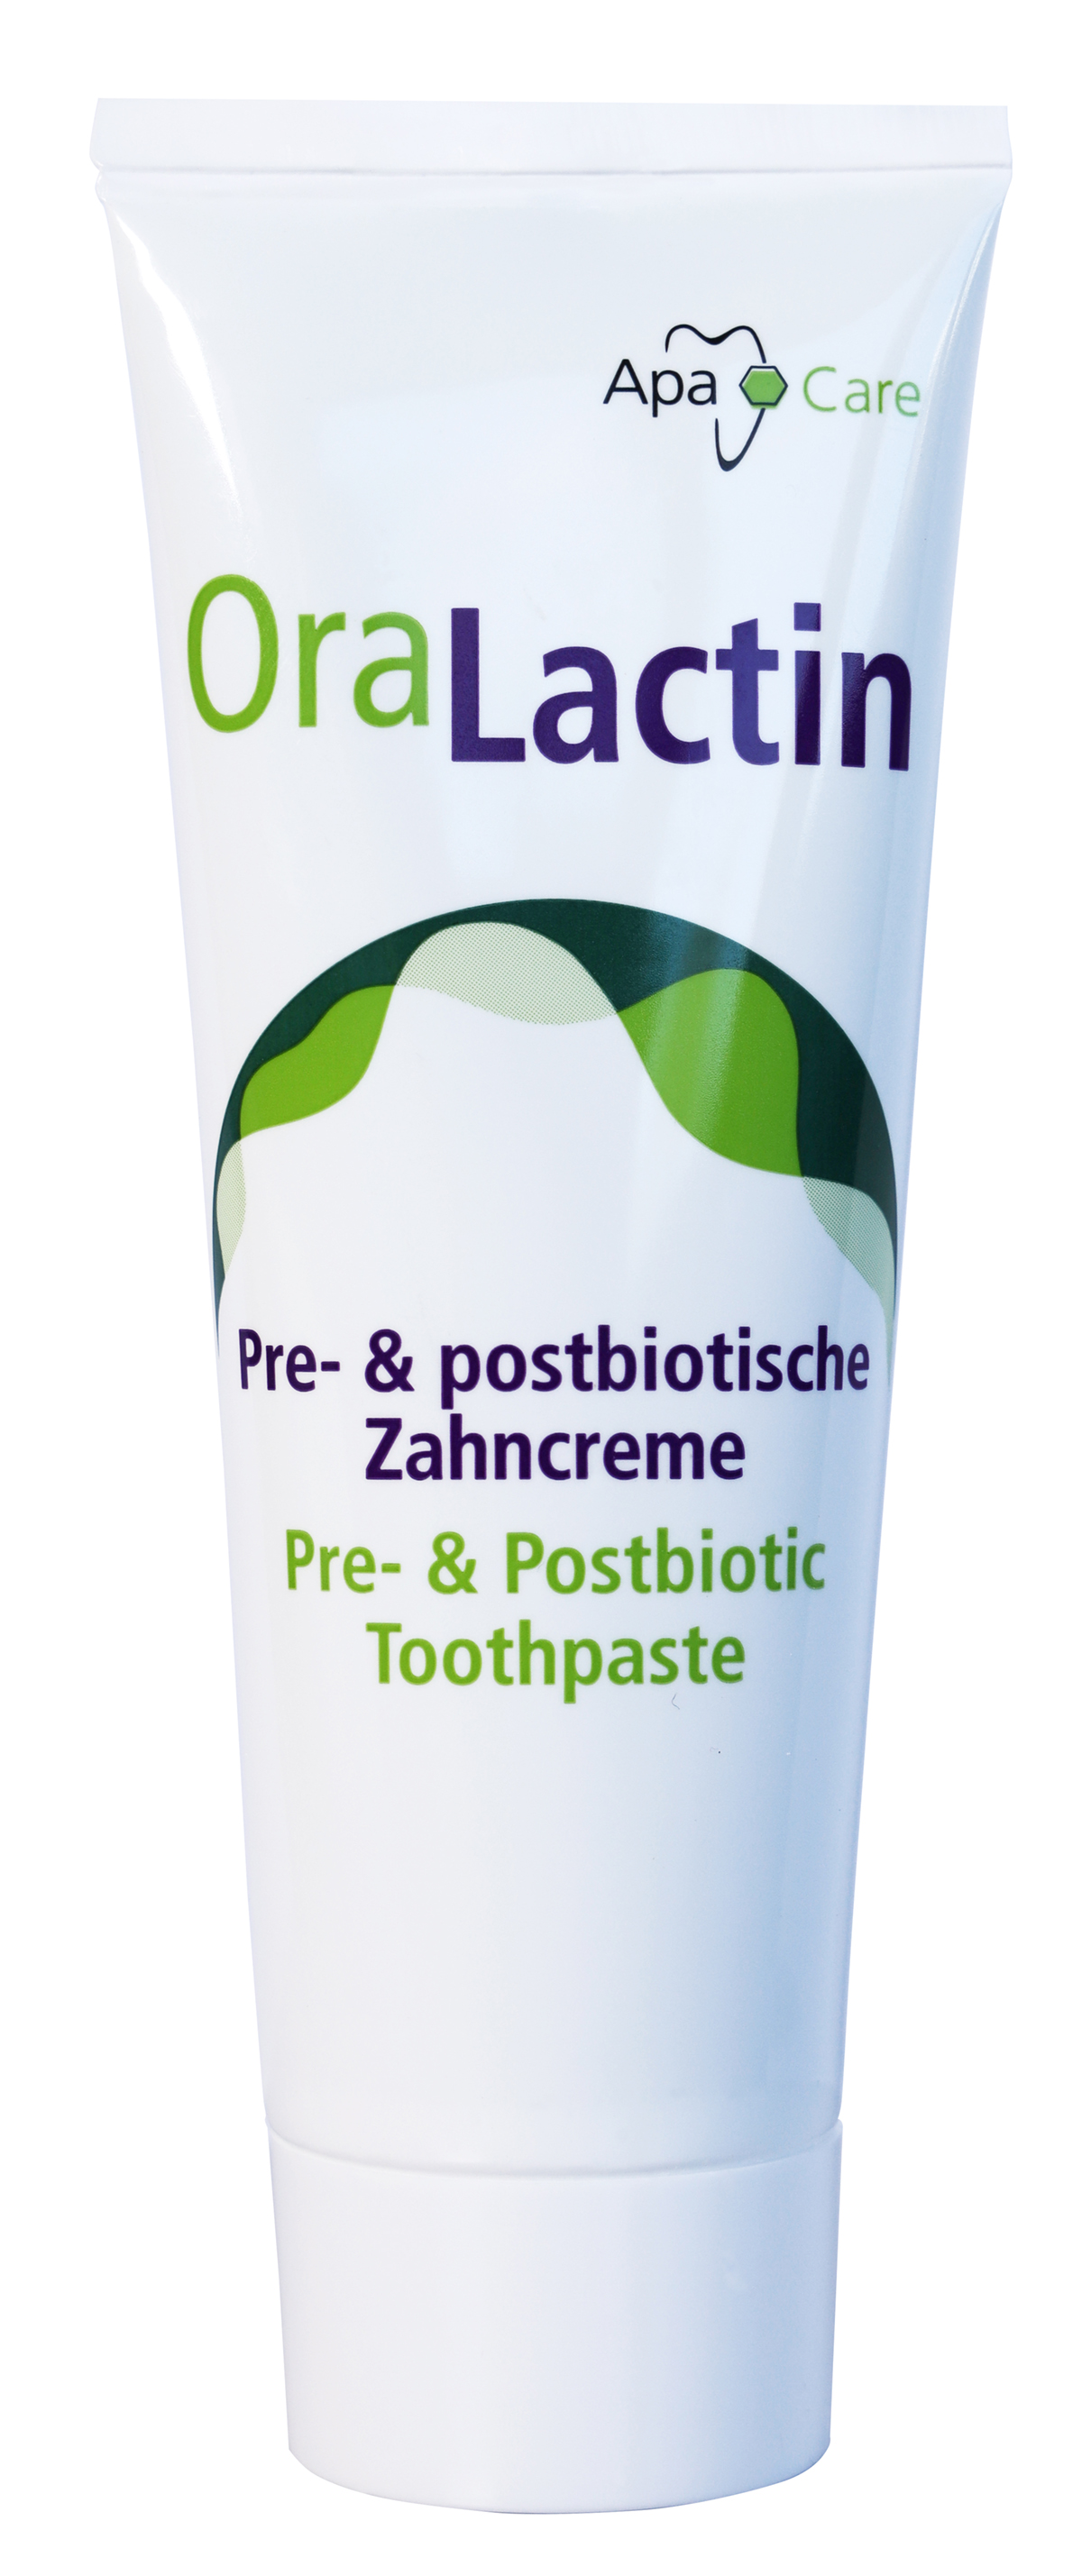  OraLactin pre- and postbiotic toothpaste